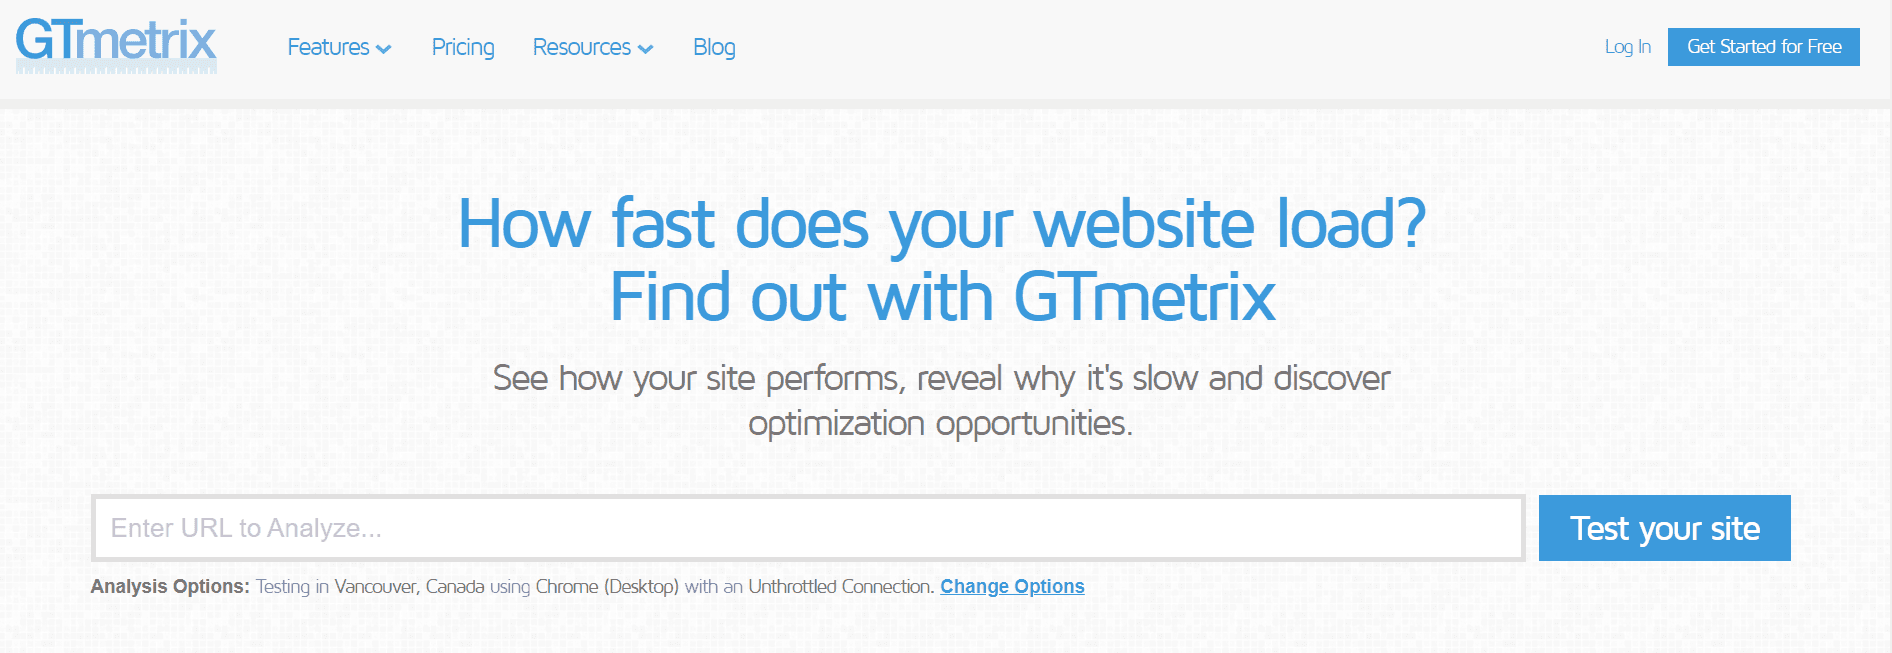 GTmetrix homepage screenshot